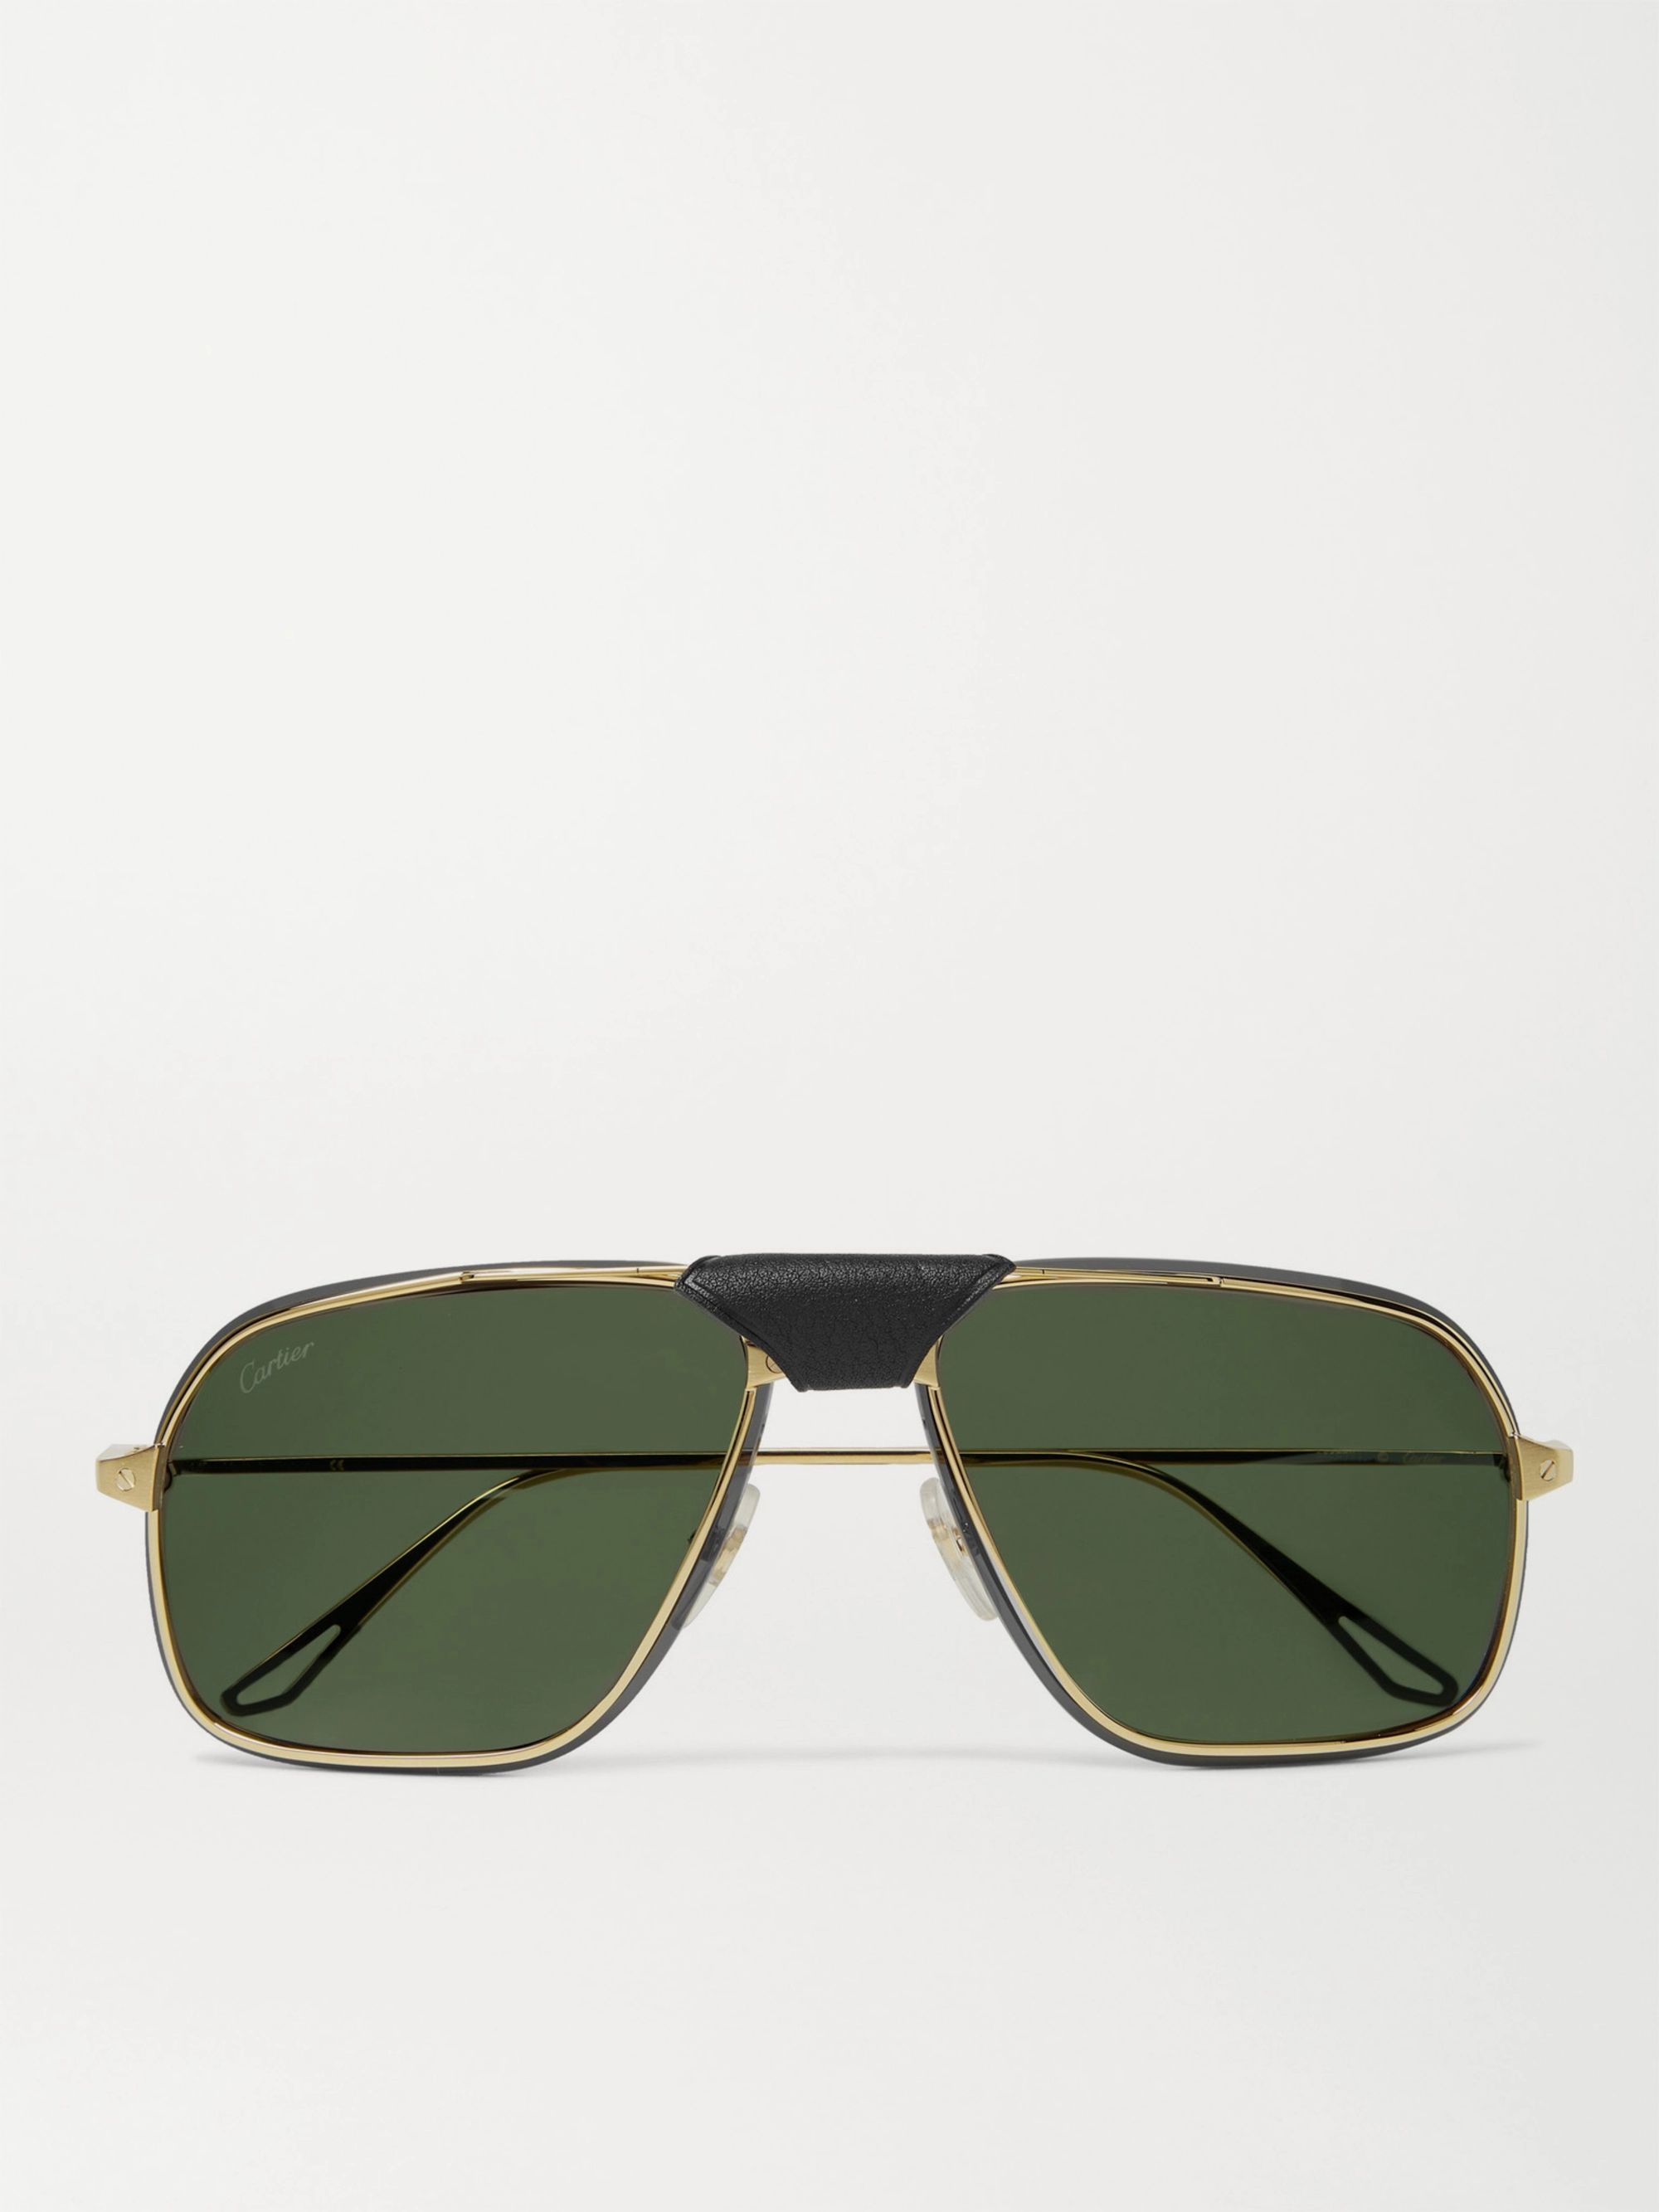 cartier sunglasses leather